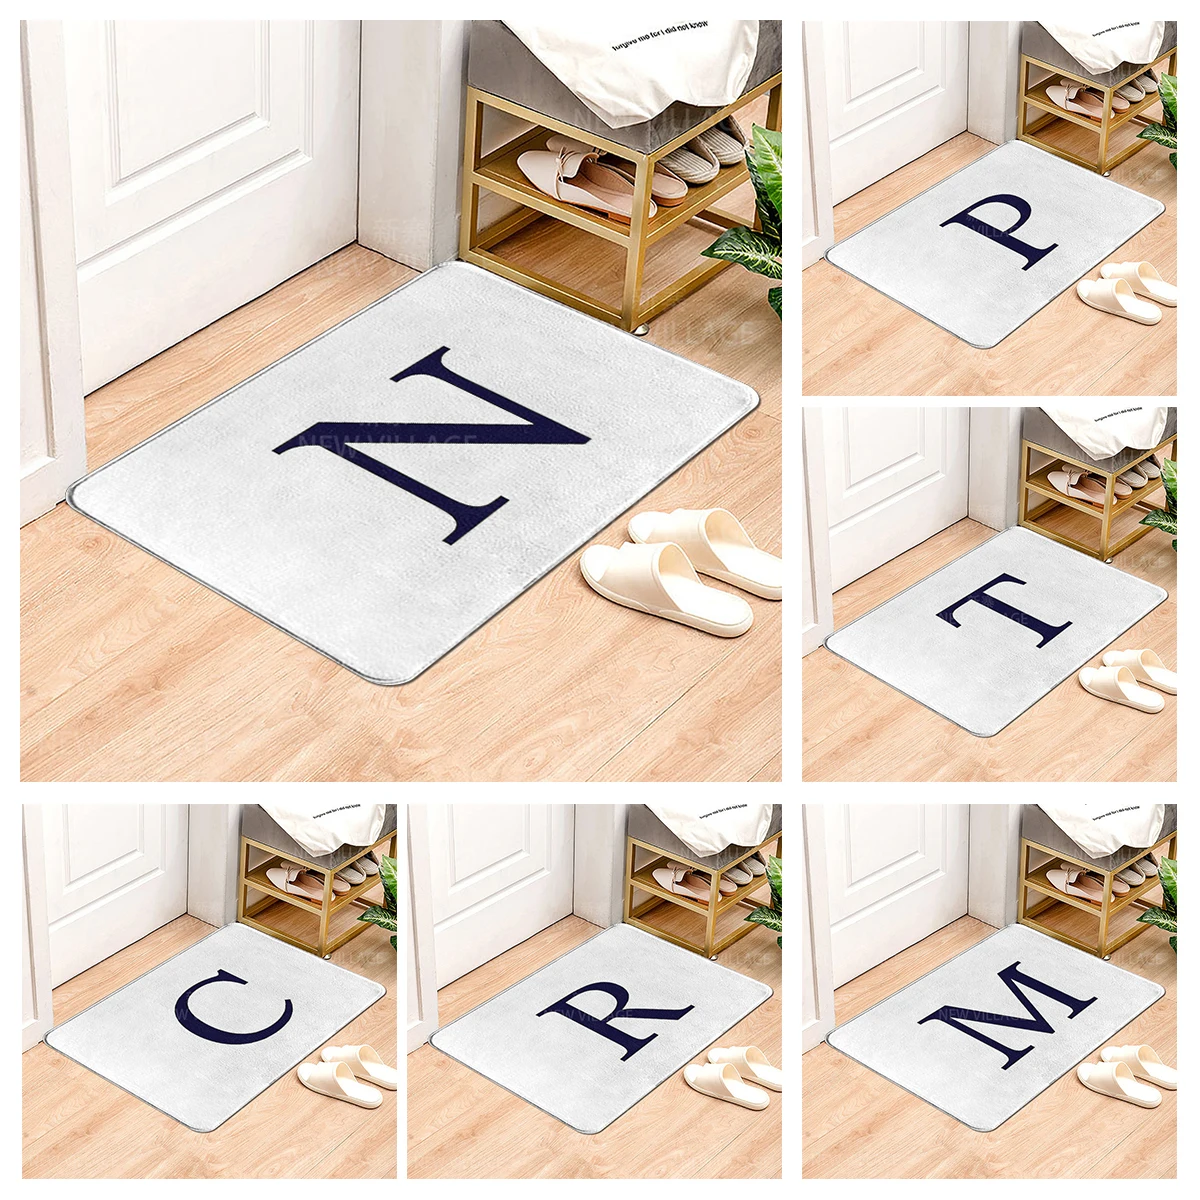 

House carpet letter series Home doormat entrance Room Bathmat Footmat bathroom non-slip mat Kitchen water absorption mat